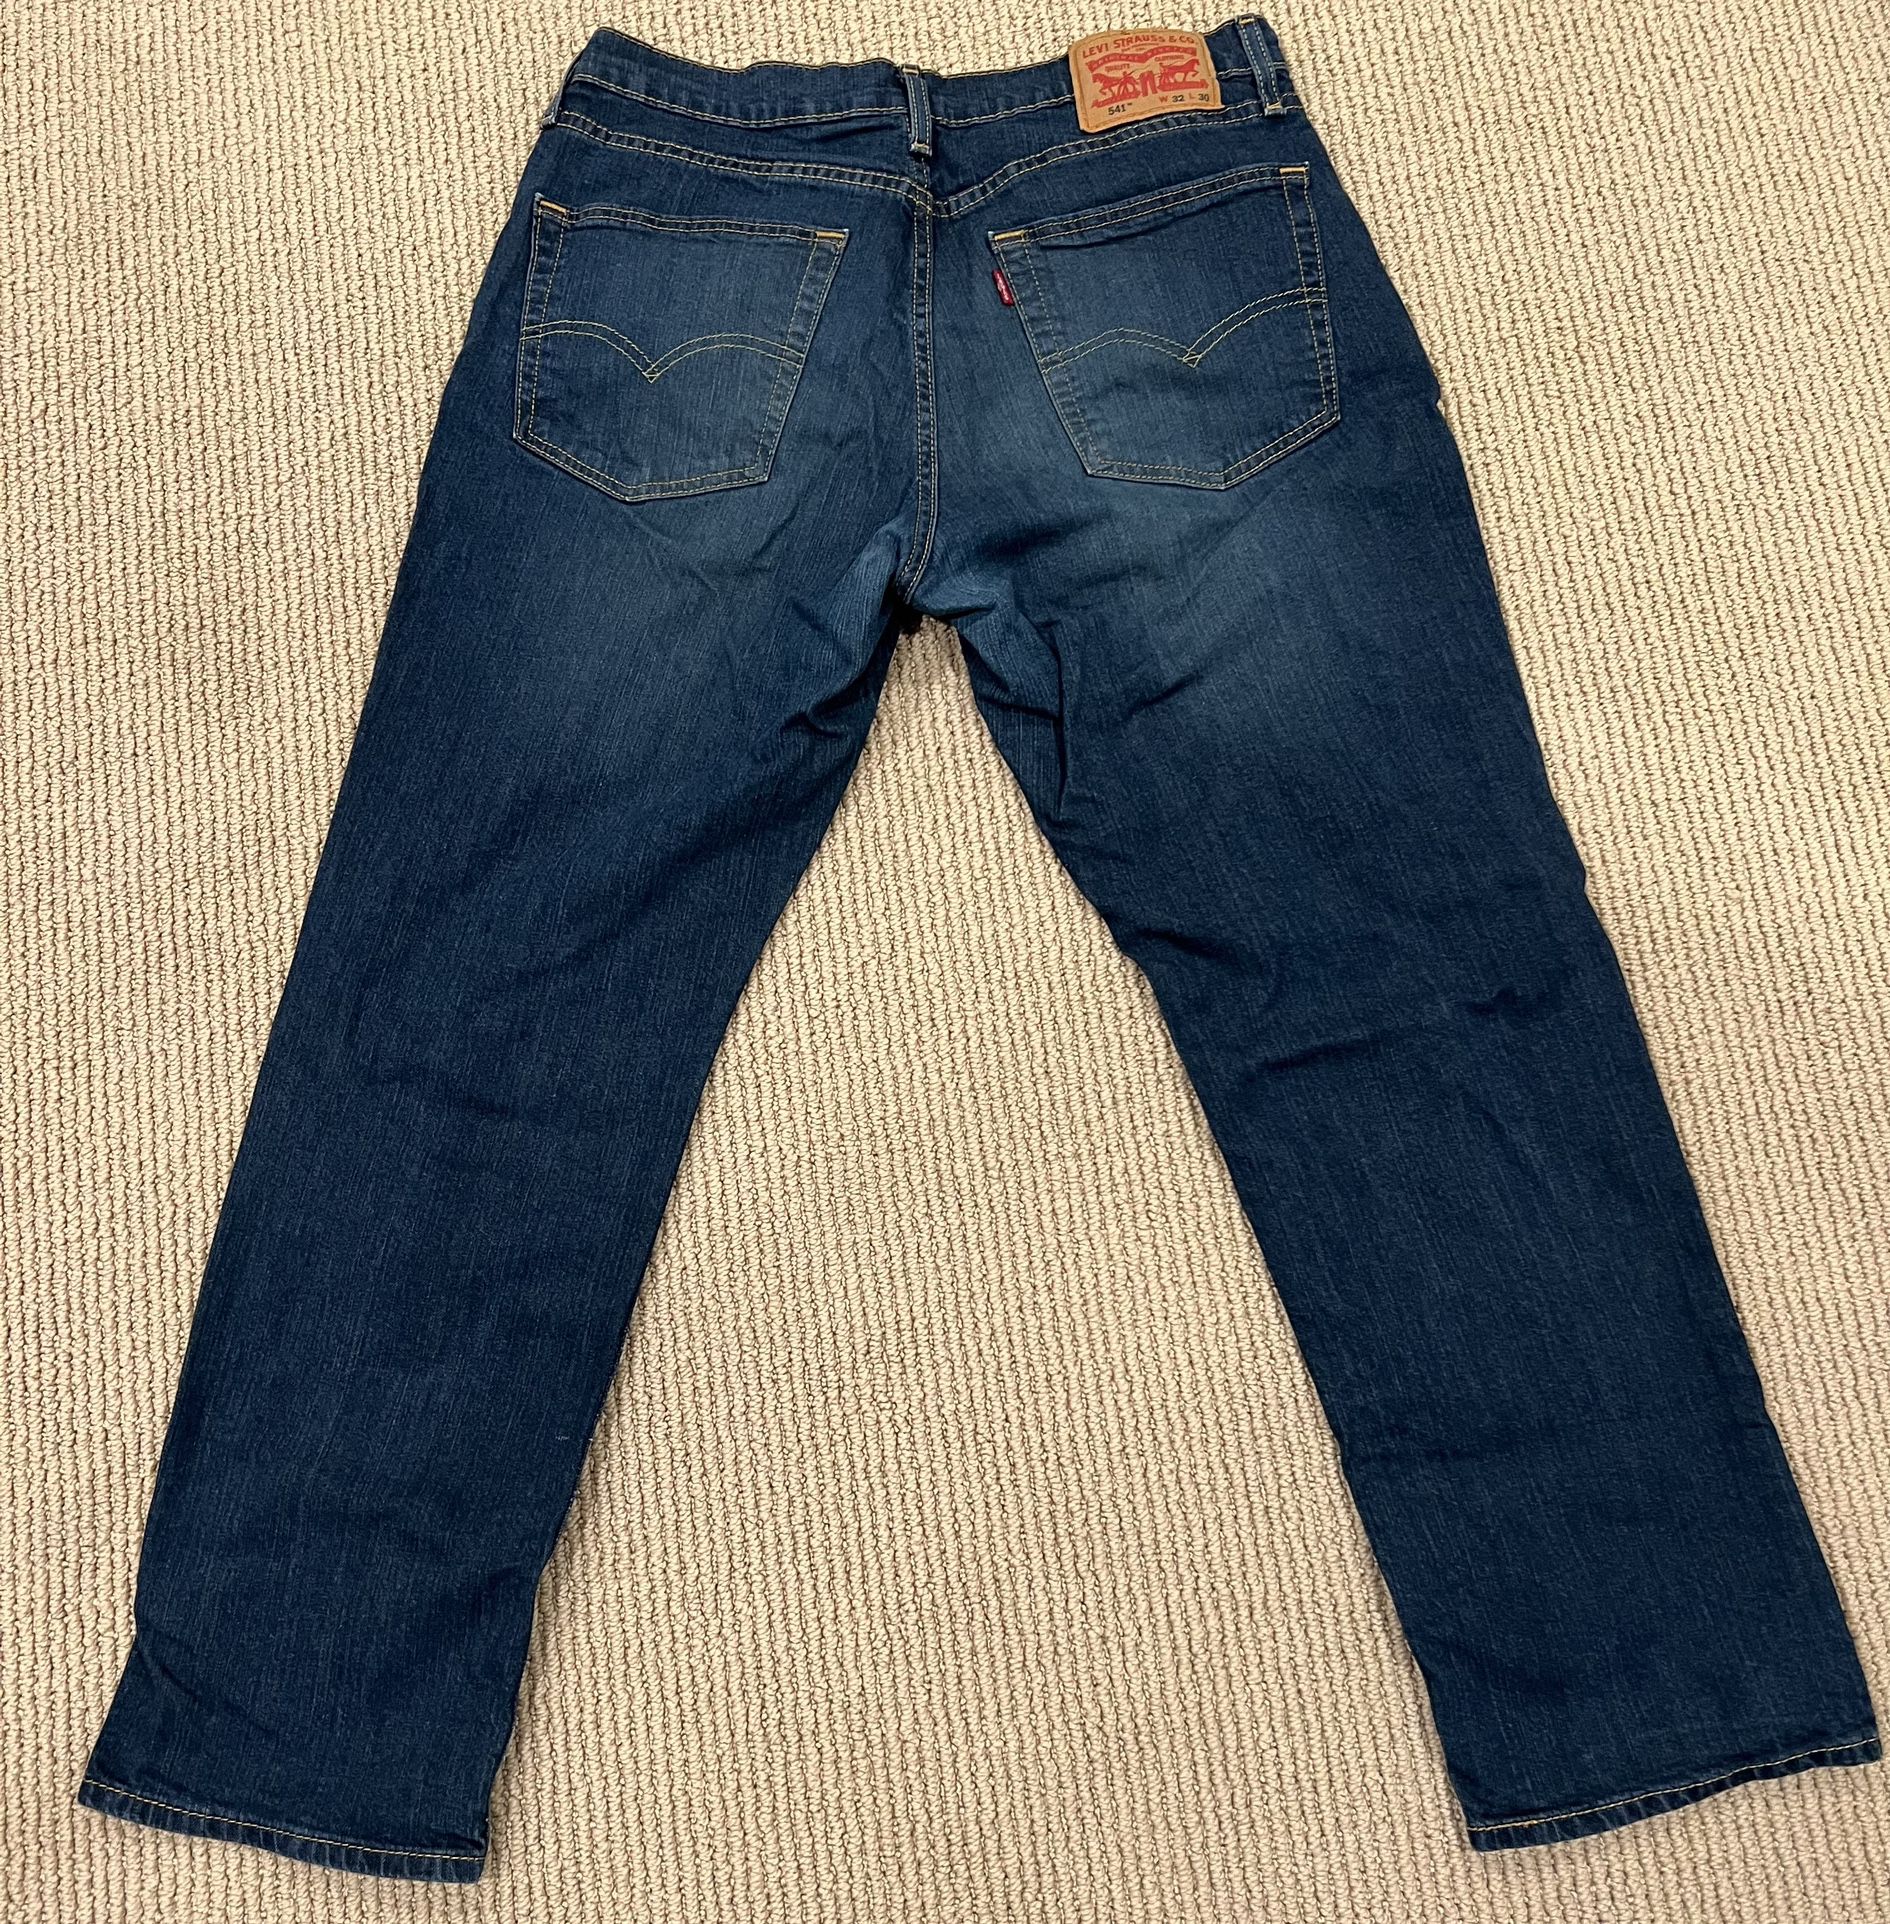  Levi’s Men’s/Boys 541 Jeans 32x30-Like New!